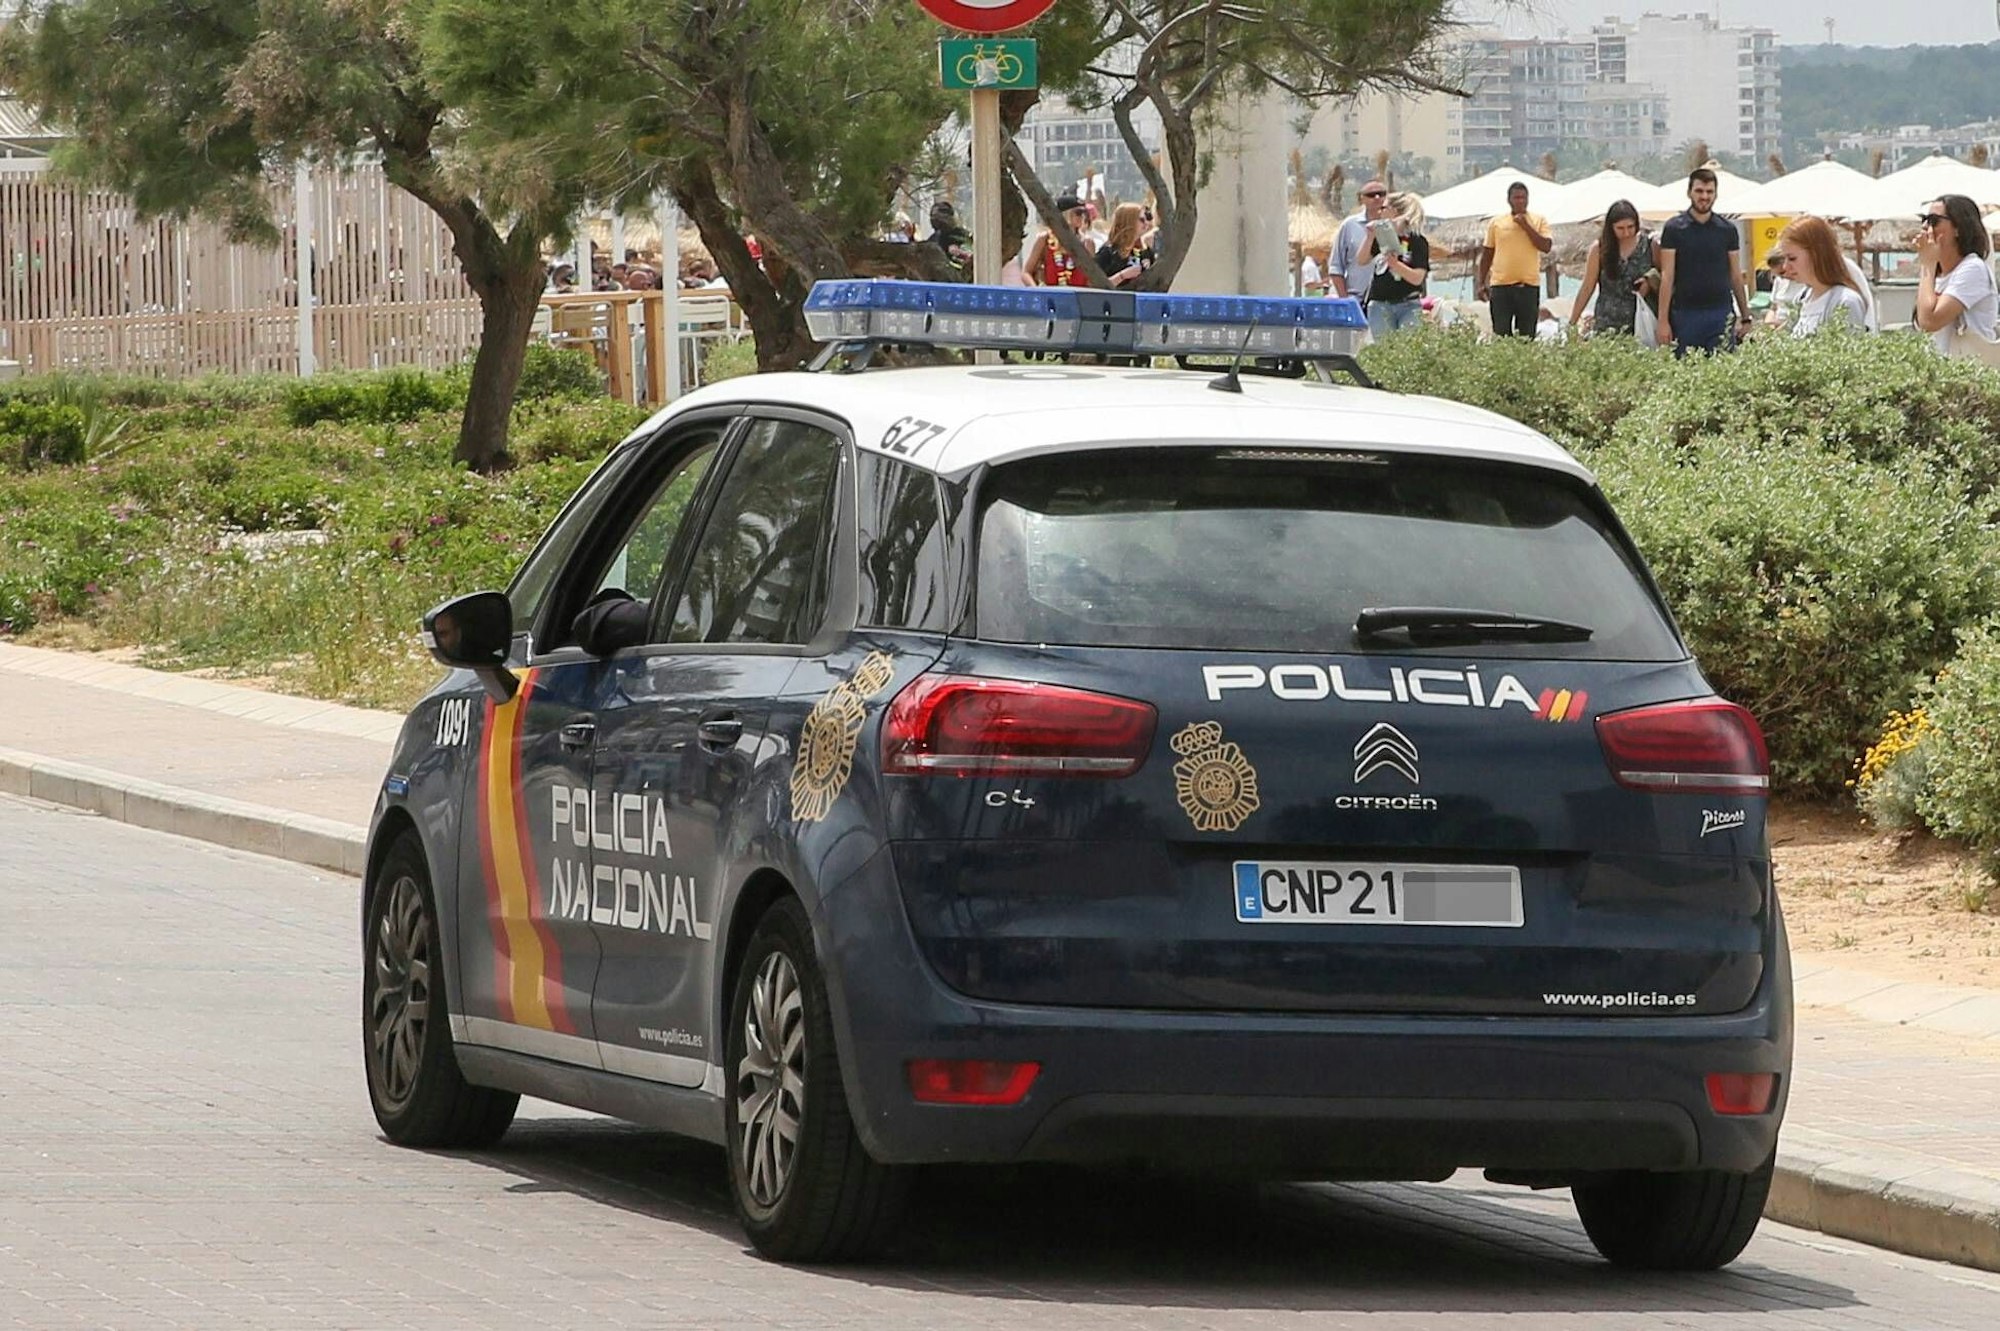 Ein Wagen der Policia Nacional fährt an der Playa de Palma auf Mallorca entlang.